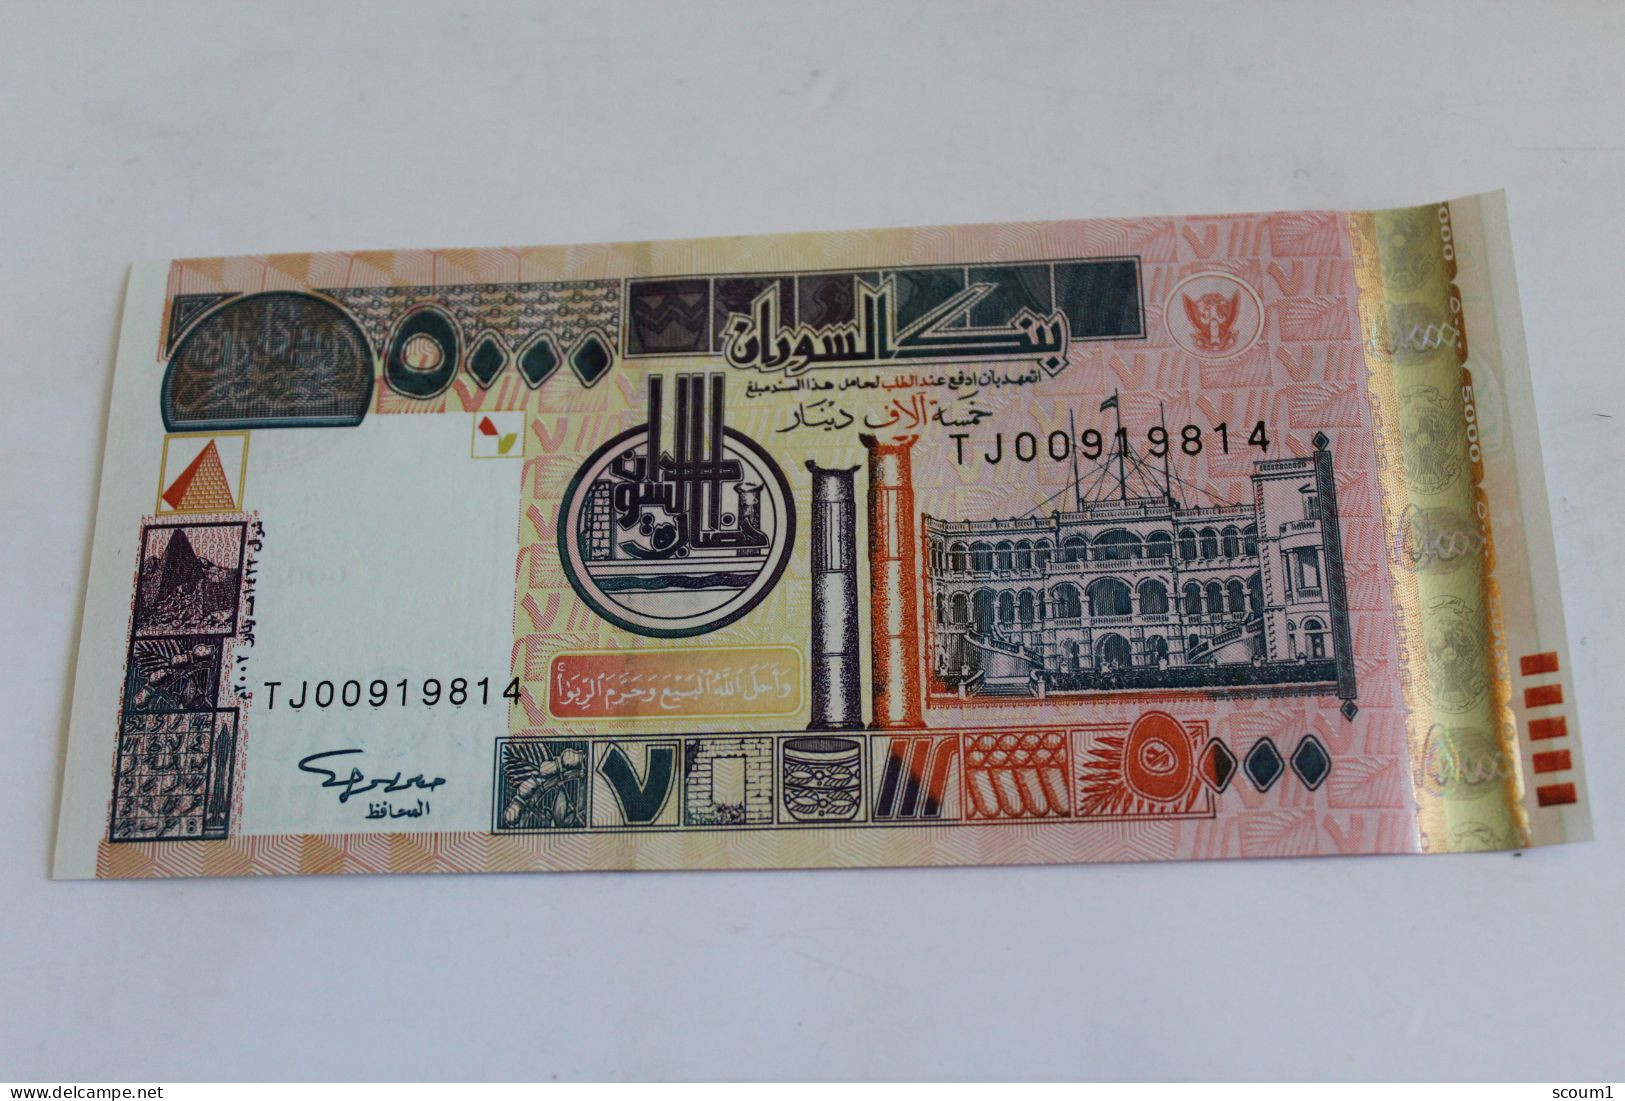 BANK OF SOUDAN 5000 Dinards - Sudan